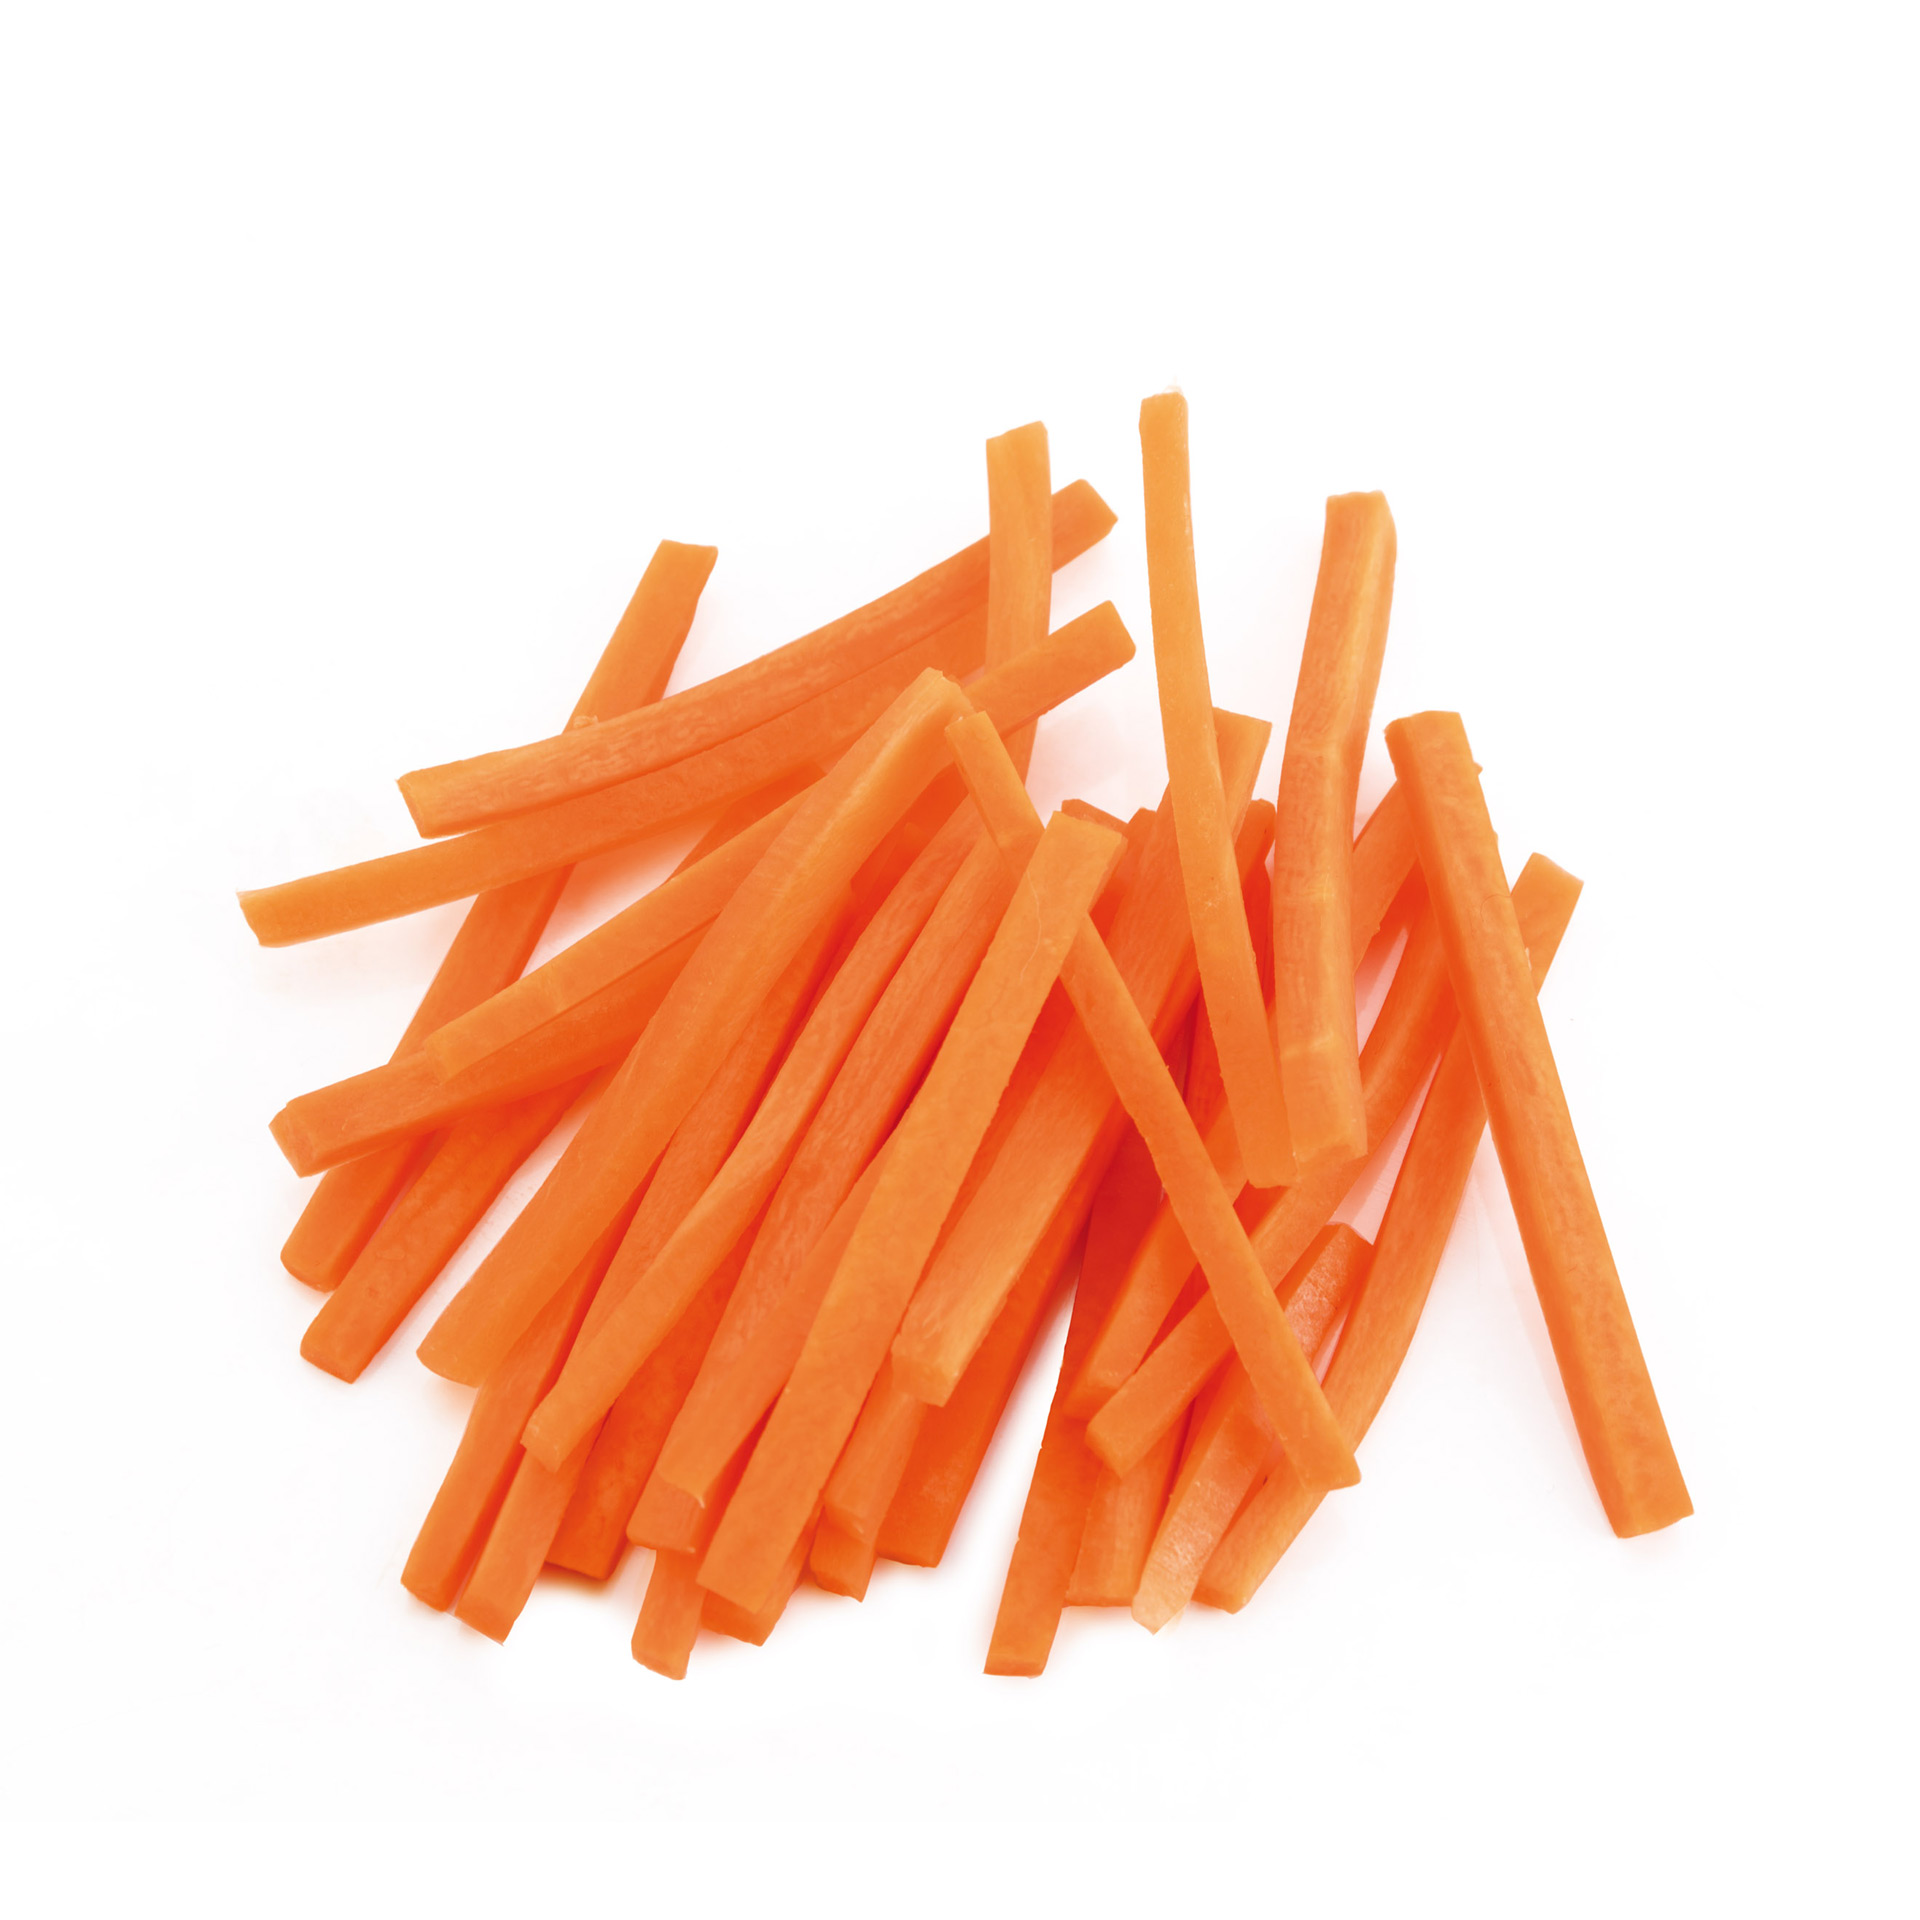 Karottensticks aus Profi-Mandoline